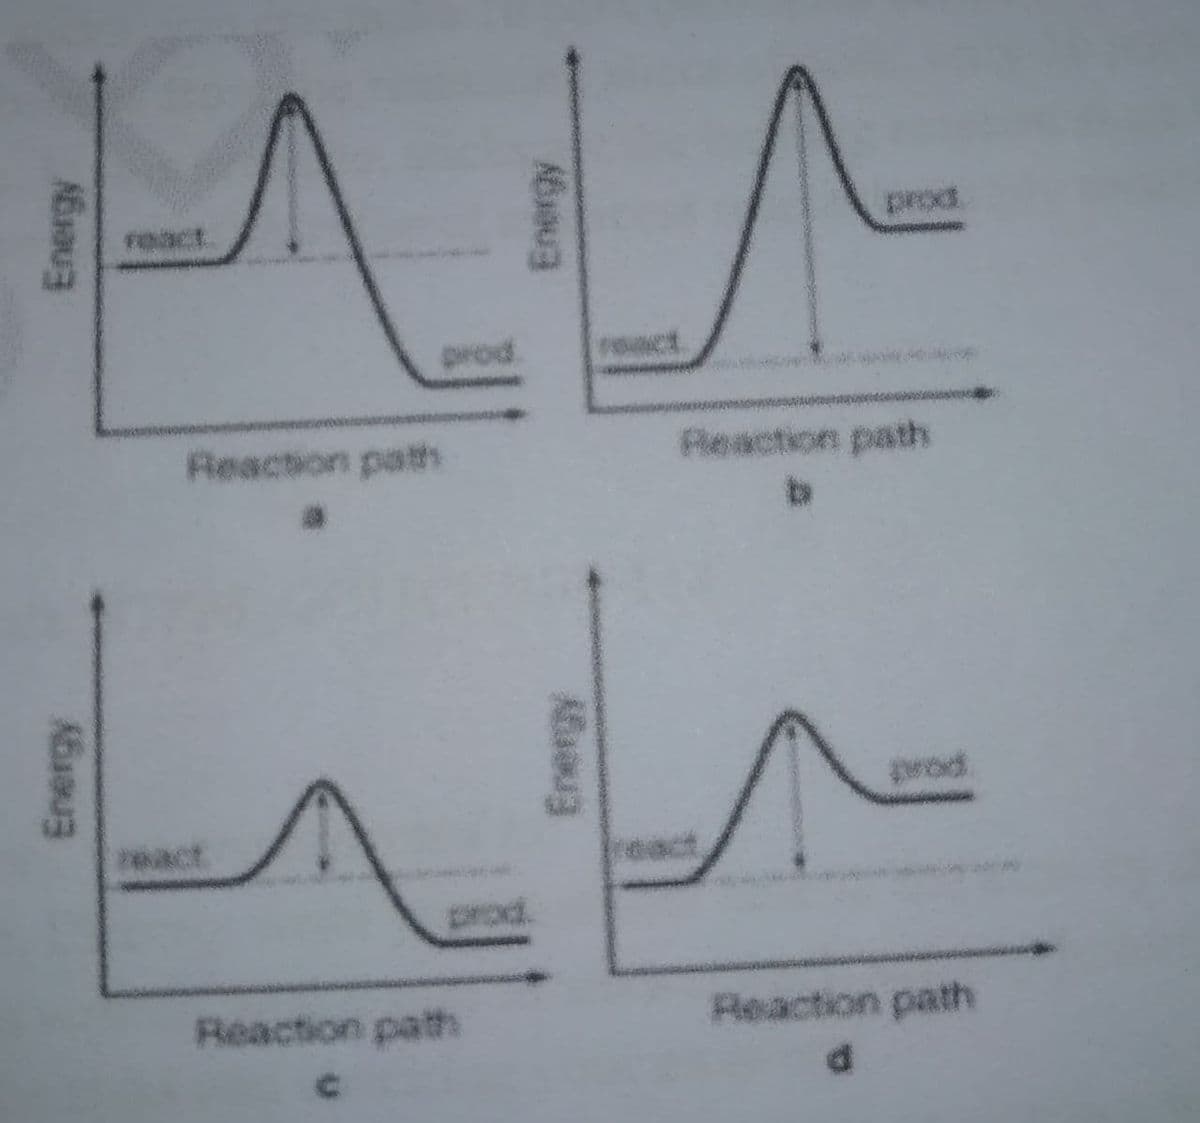 Feact
prod.
prod
ract
Reaction path
Reaction path
b.
wod
react
prod.
Reaction path
Reaction path
